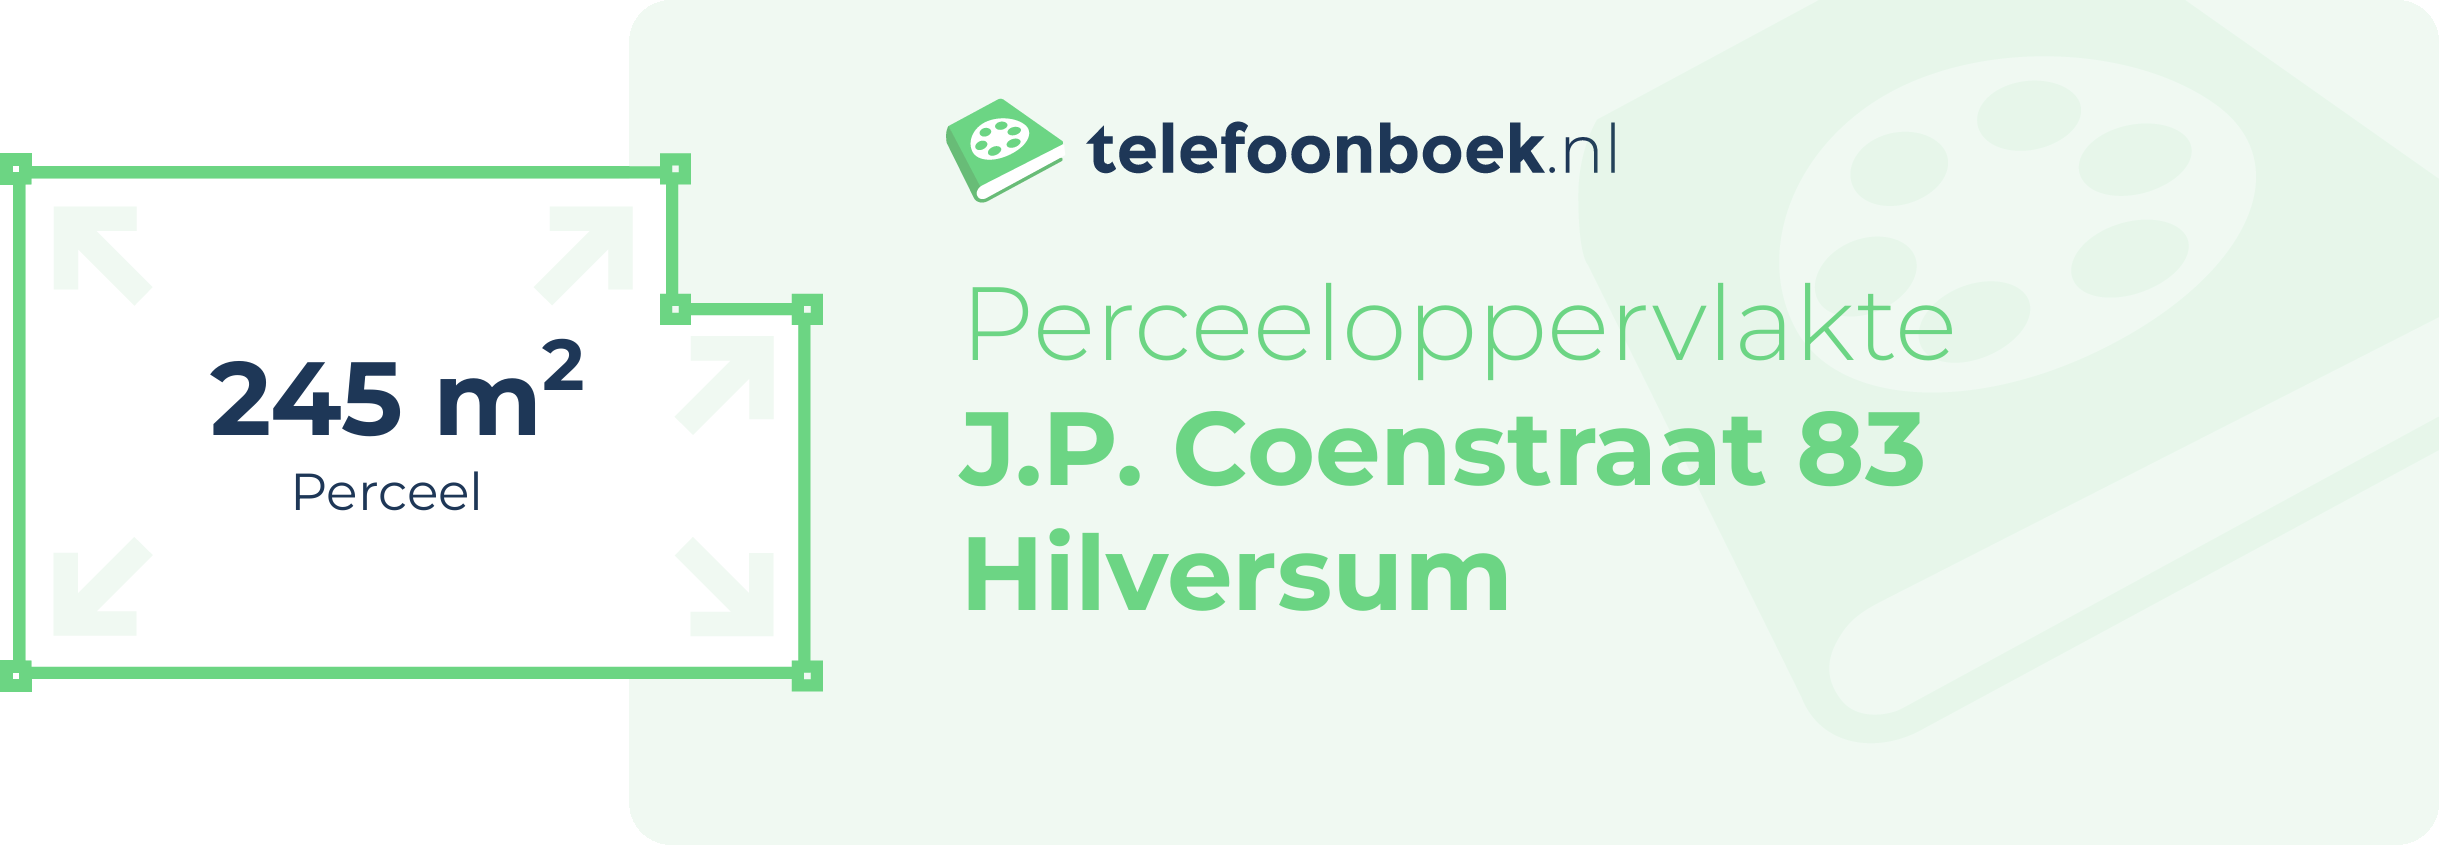 Perceeloppervlakte J.P. Coenstraat 83 Hilversum